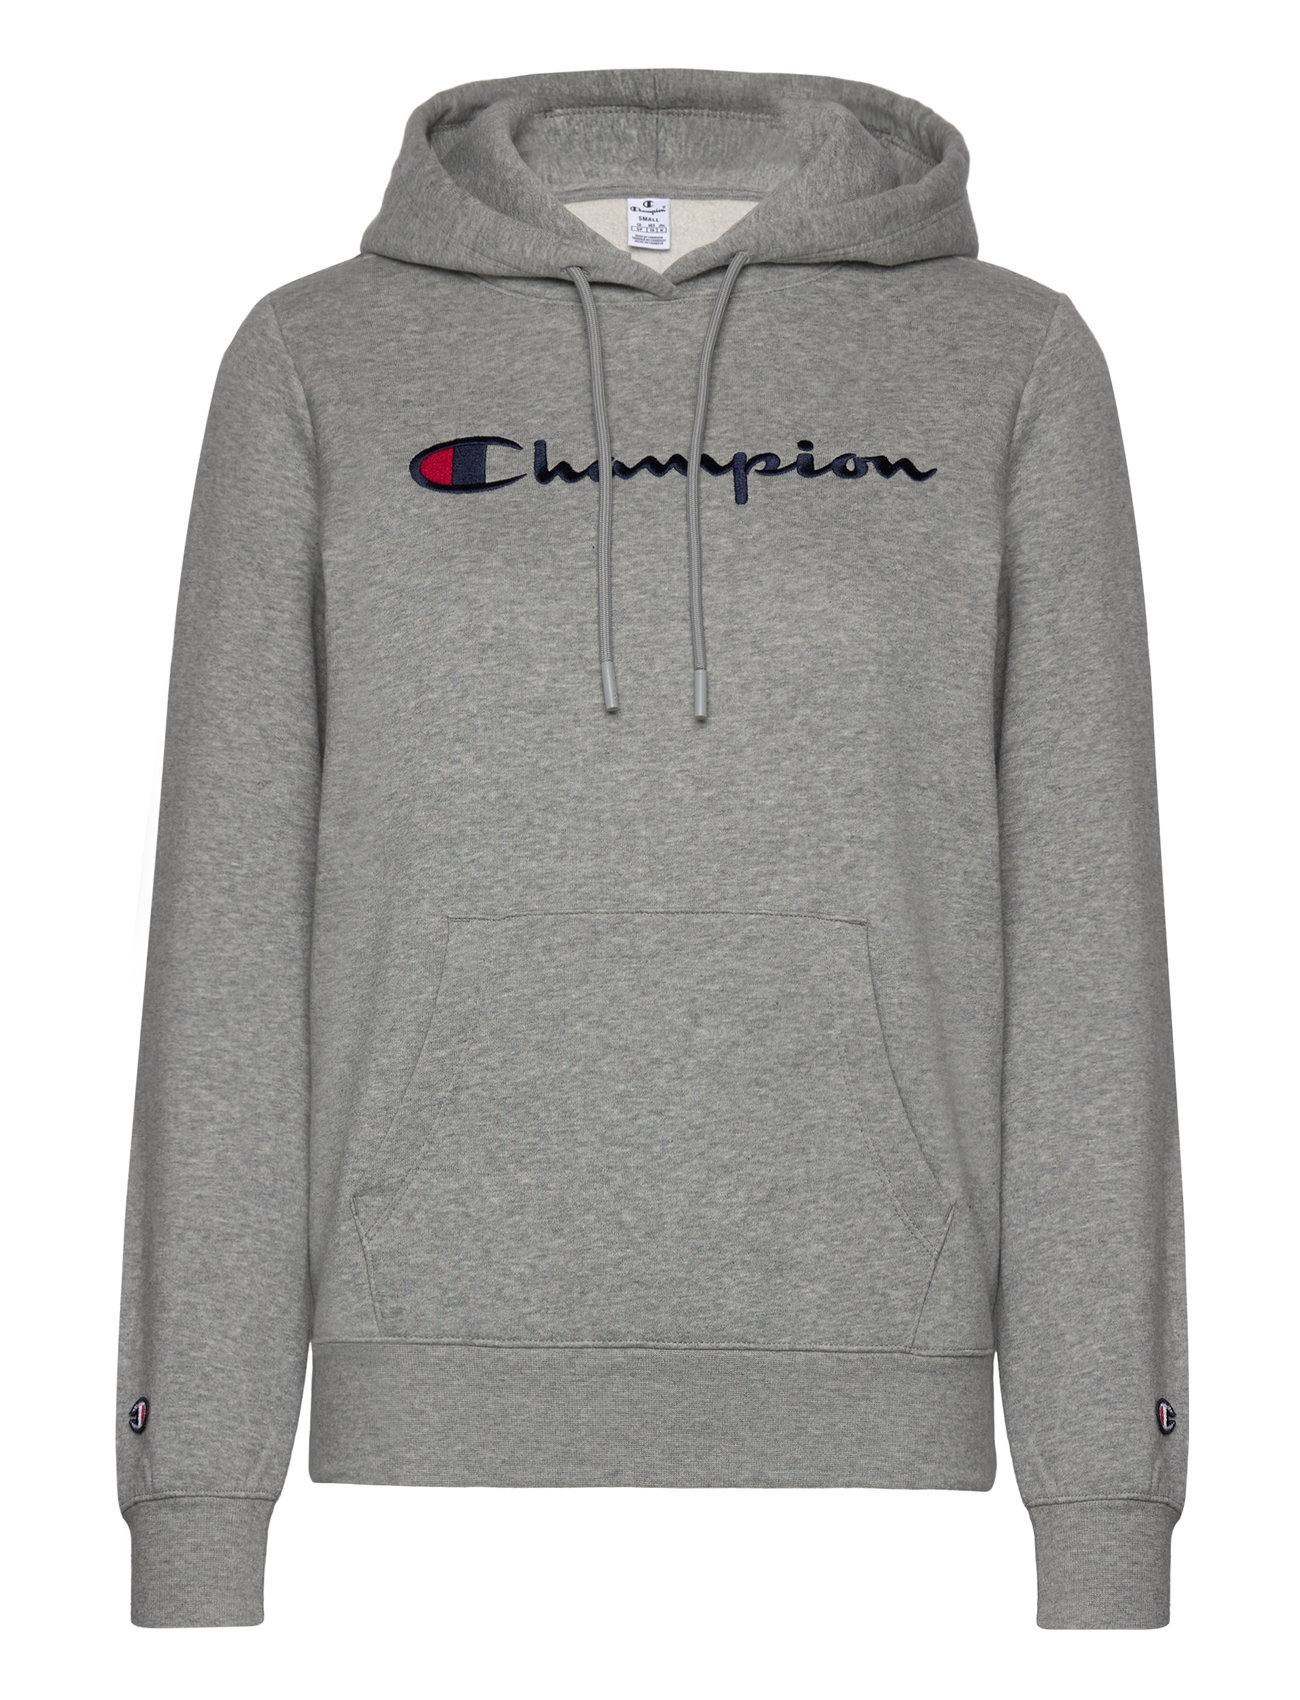 Champion Hooded Sweatshirt - Boozt.com